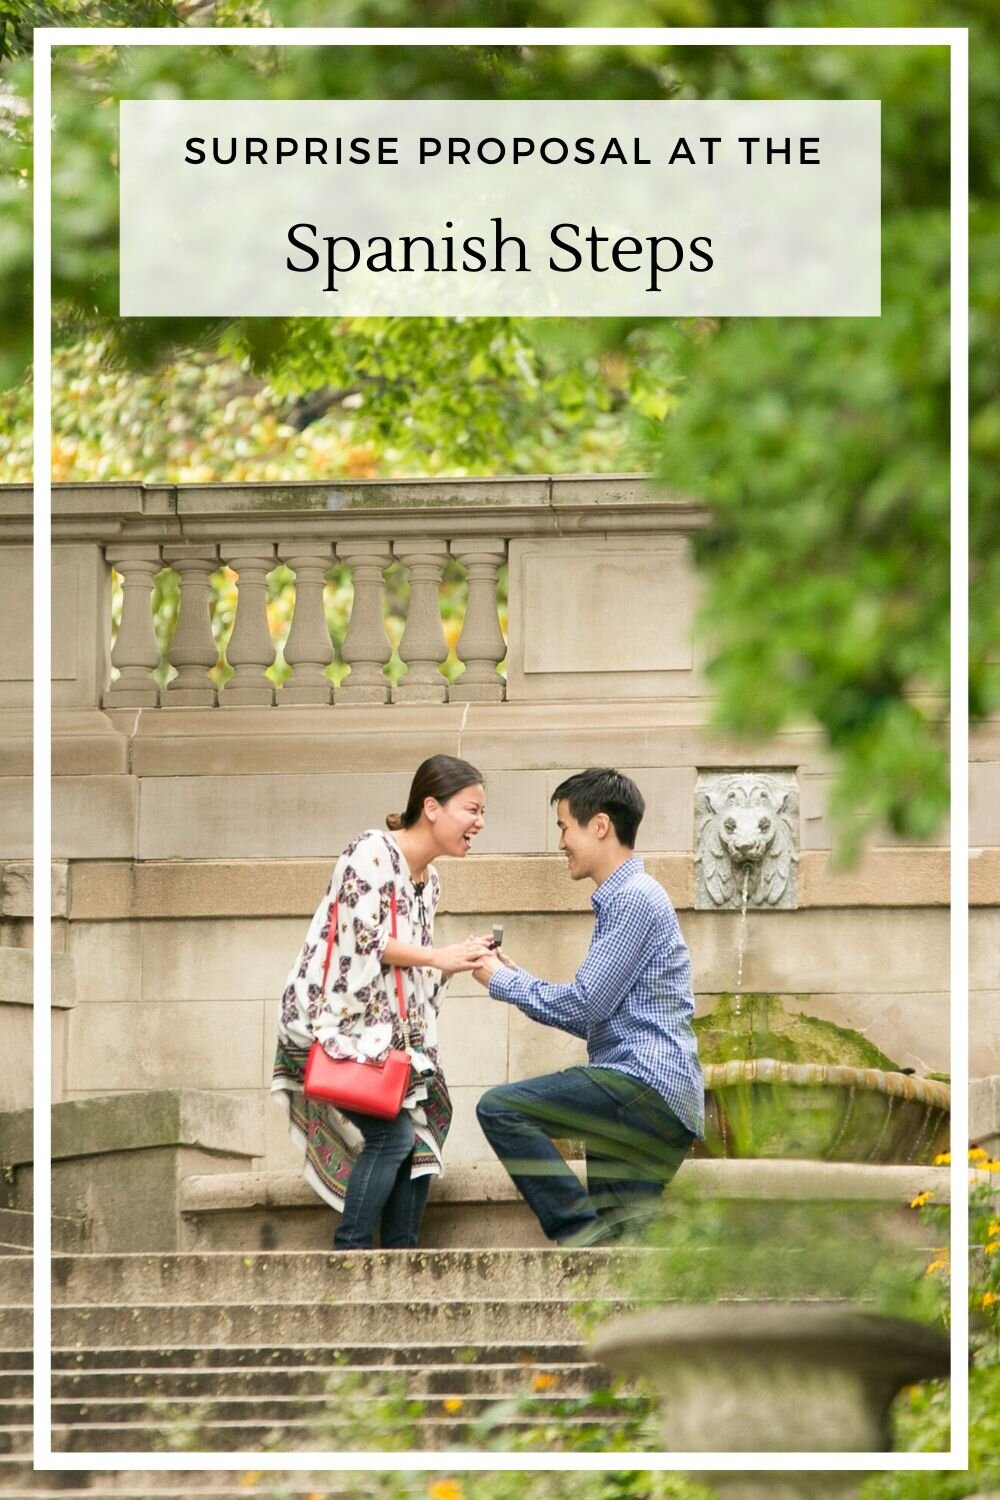 DC Spanish Steps surprise proposal